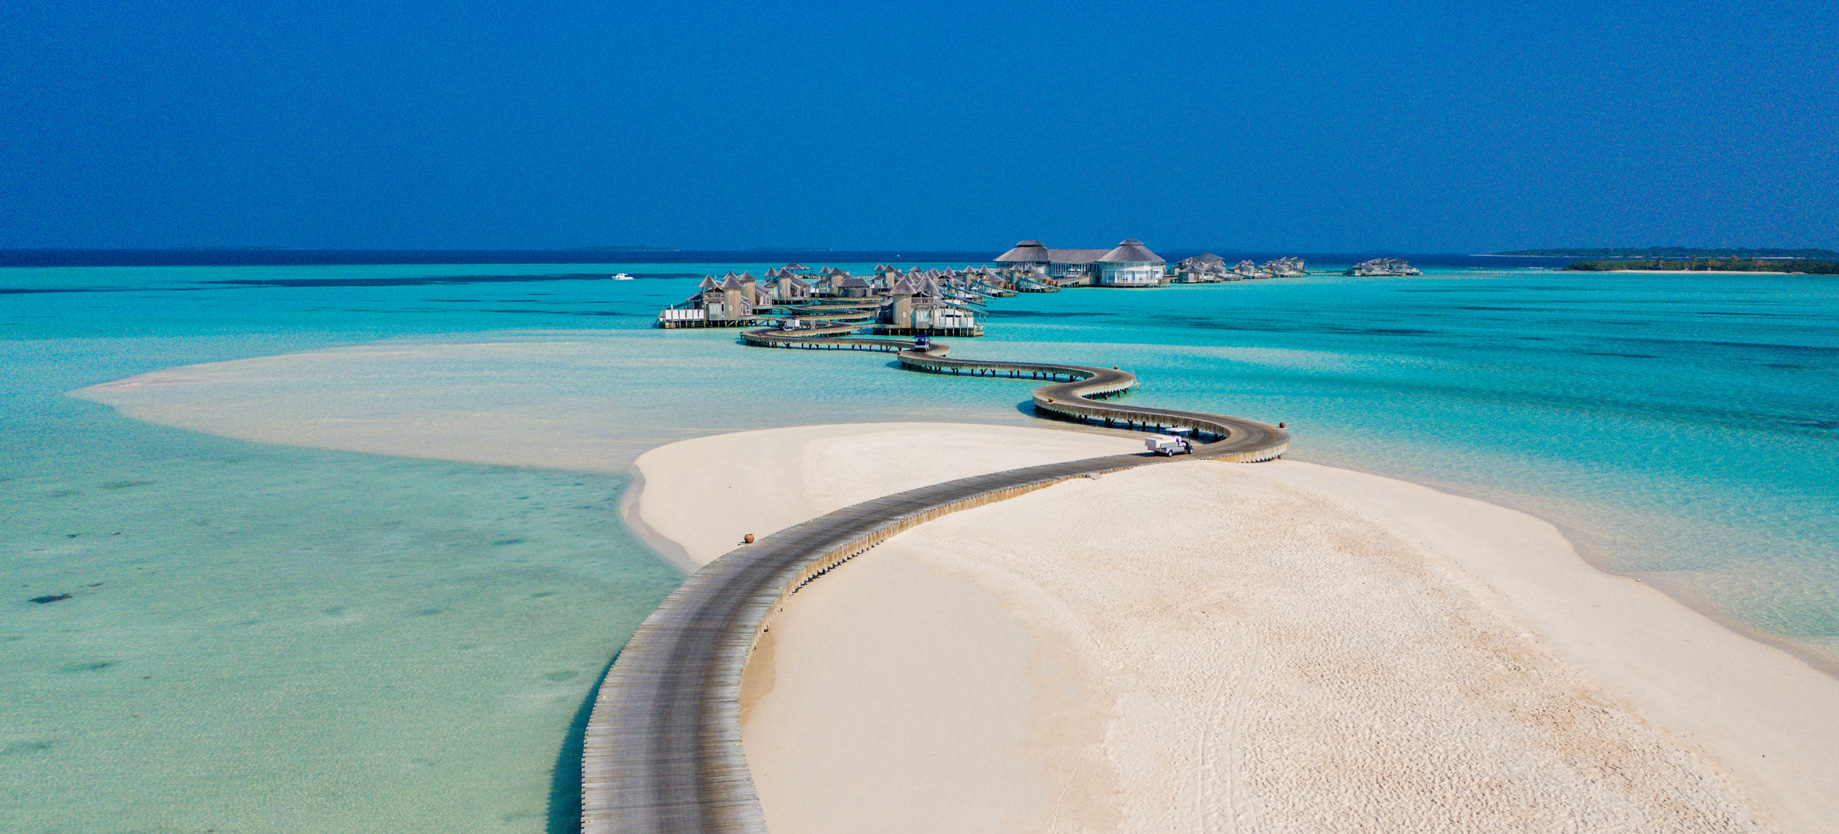 Soneva Jani Resort – Noonu Atoll, Medhufaru, Maldives – Tropical Private Island Overwater Jetty Boardwalk Aerial